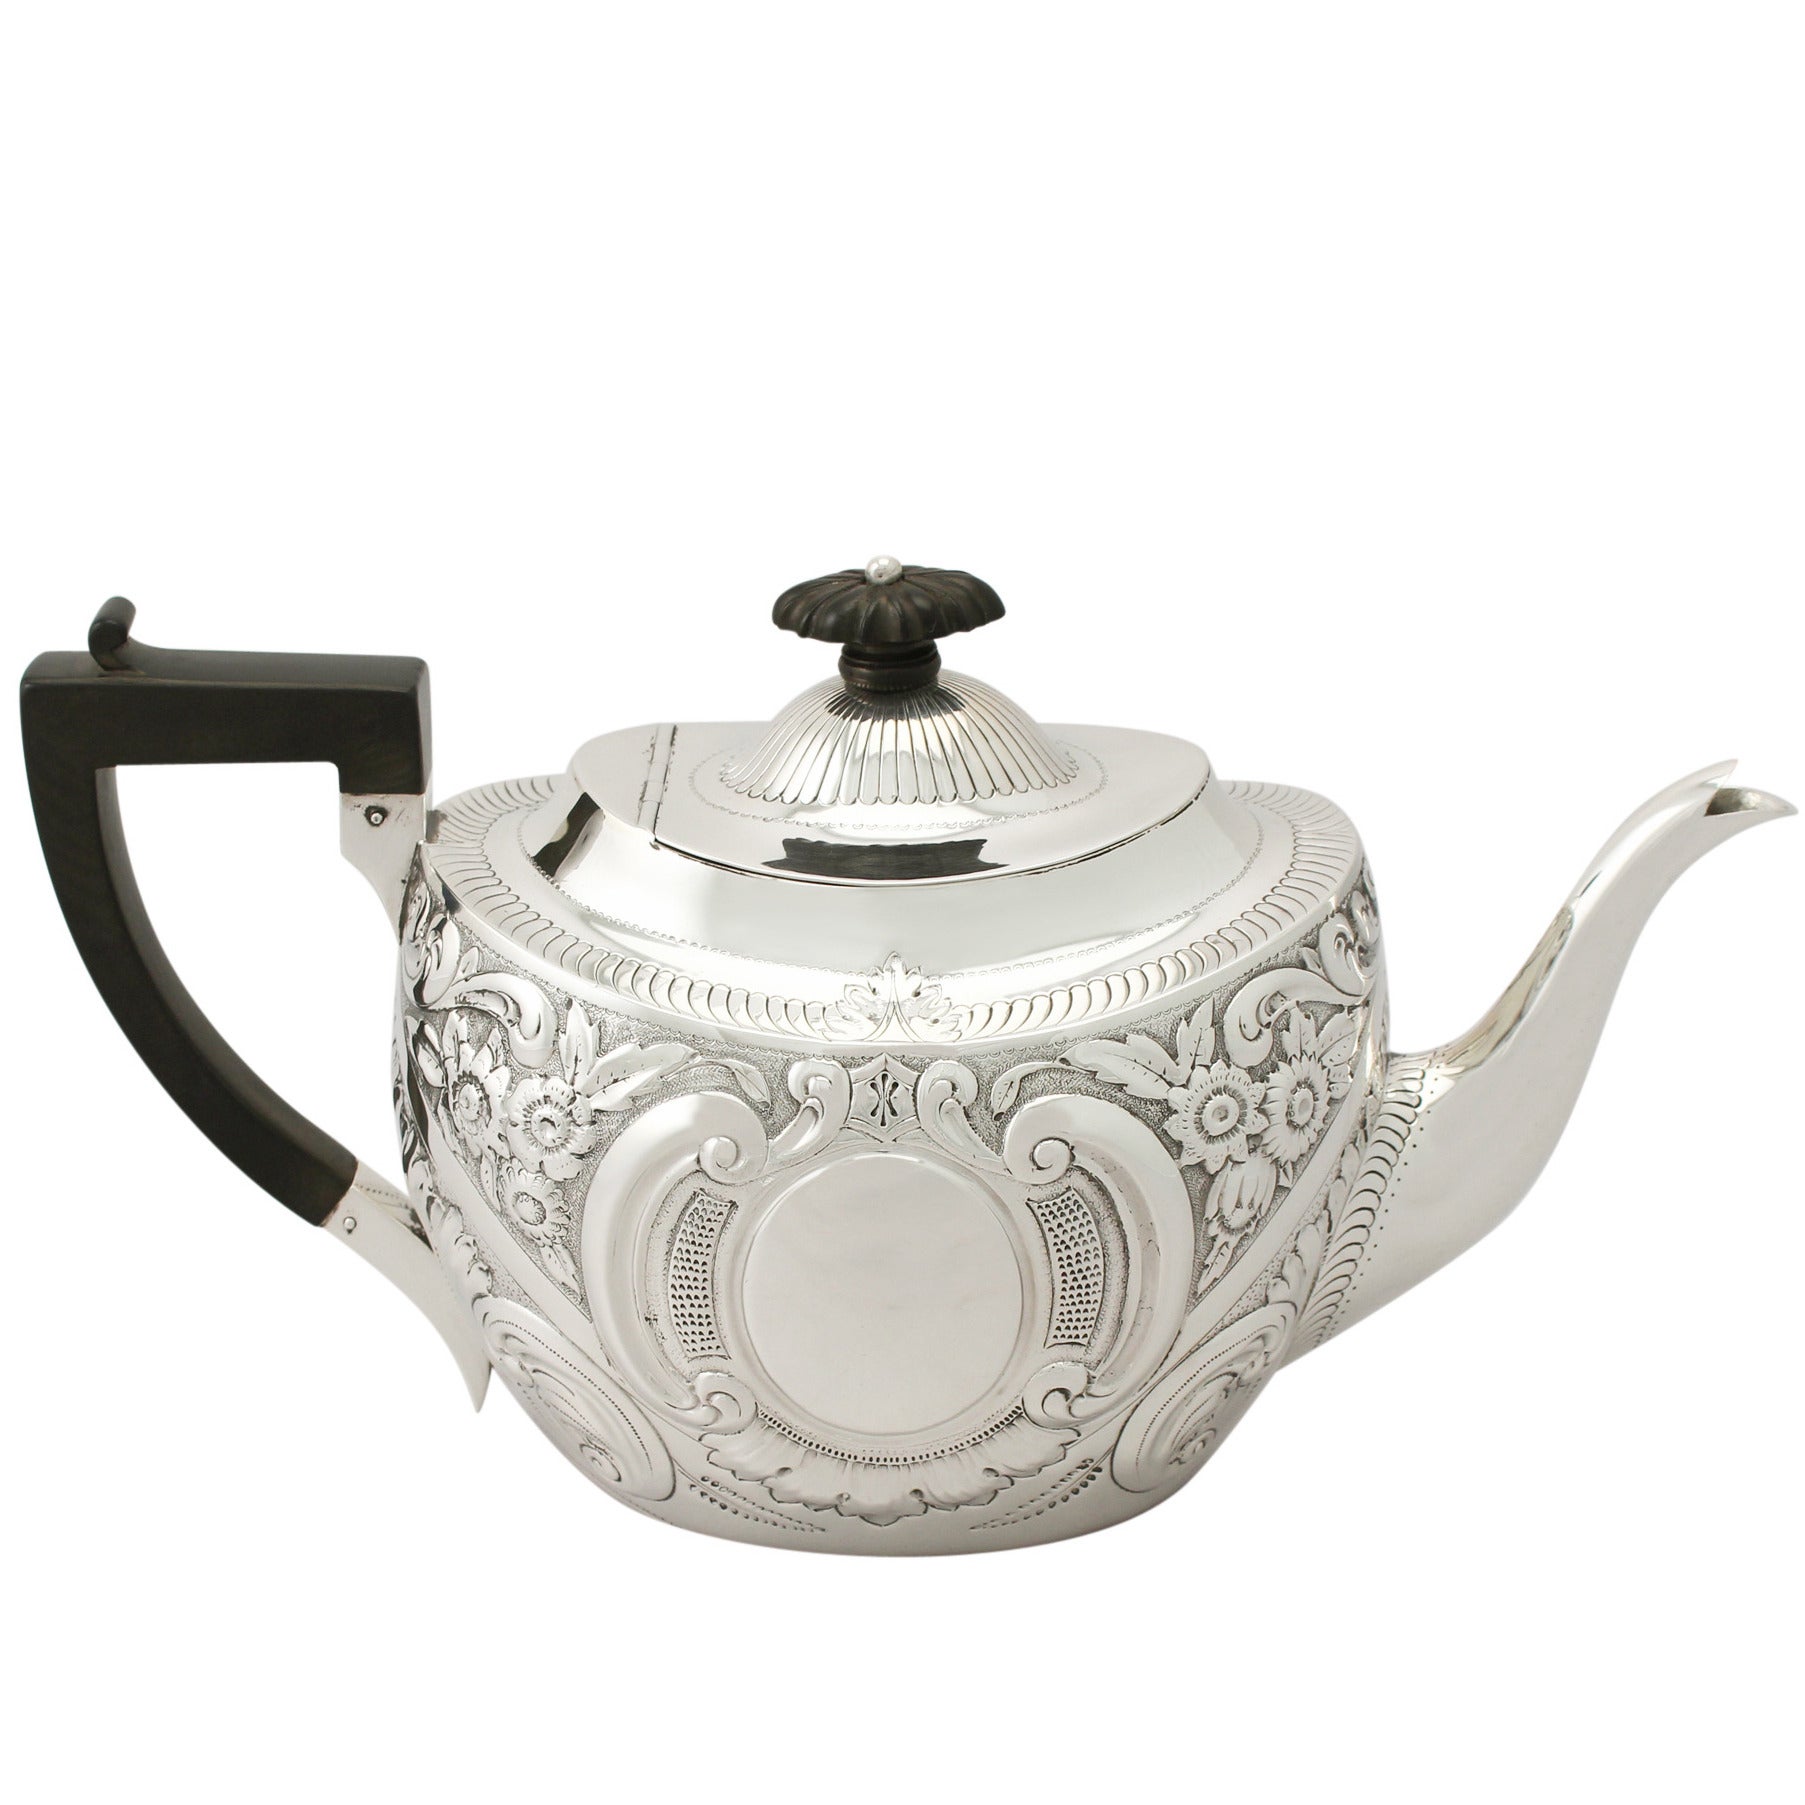 1900s Antique Edwardian Sterling Silver Teapot